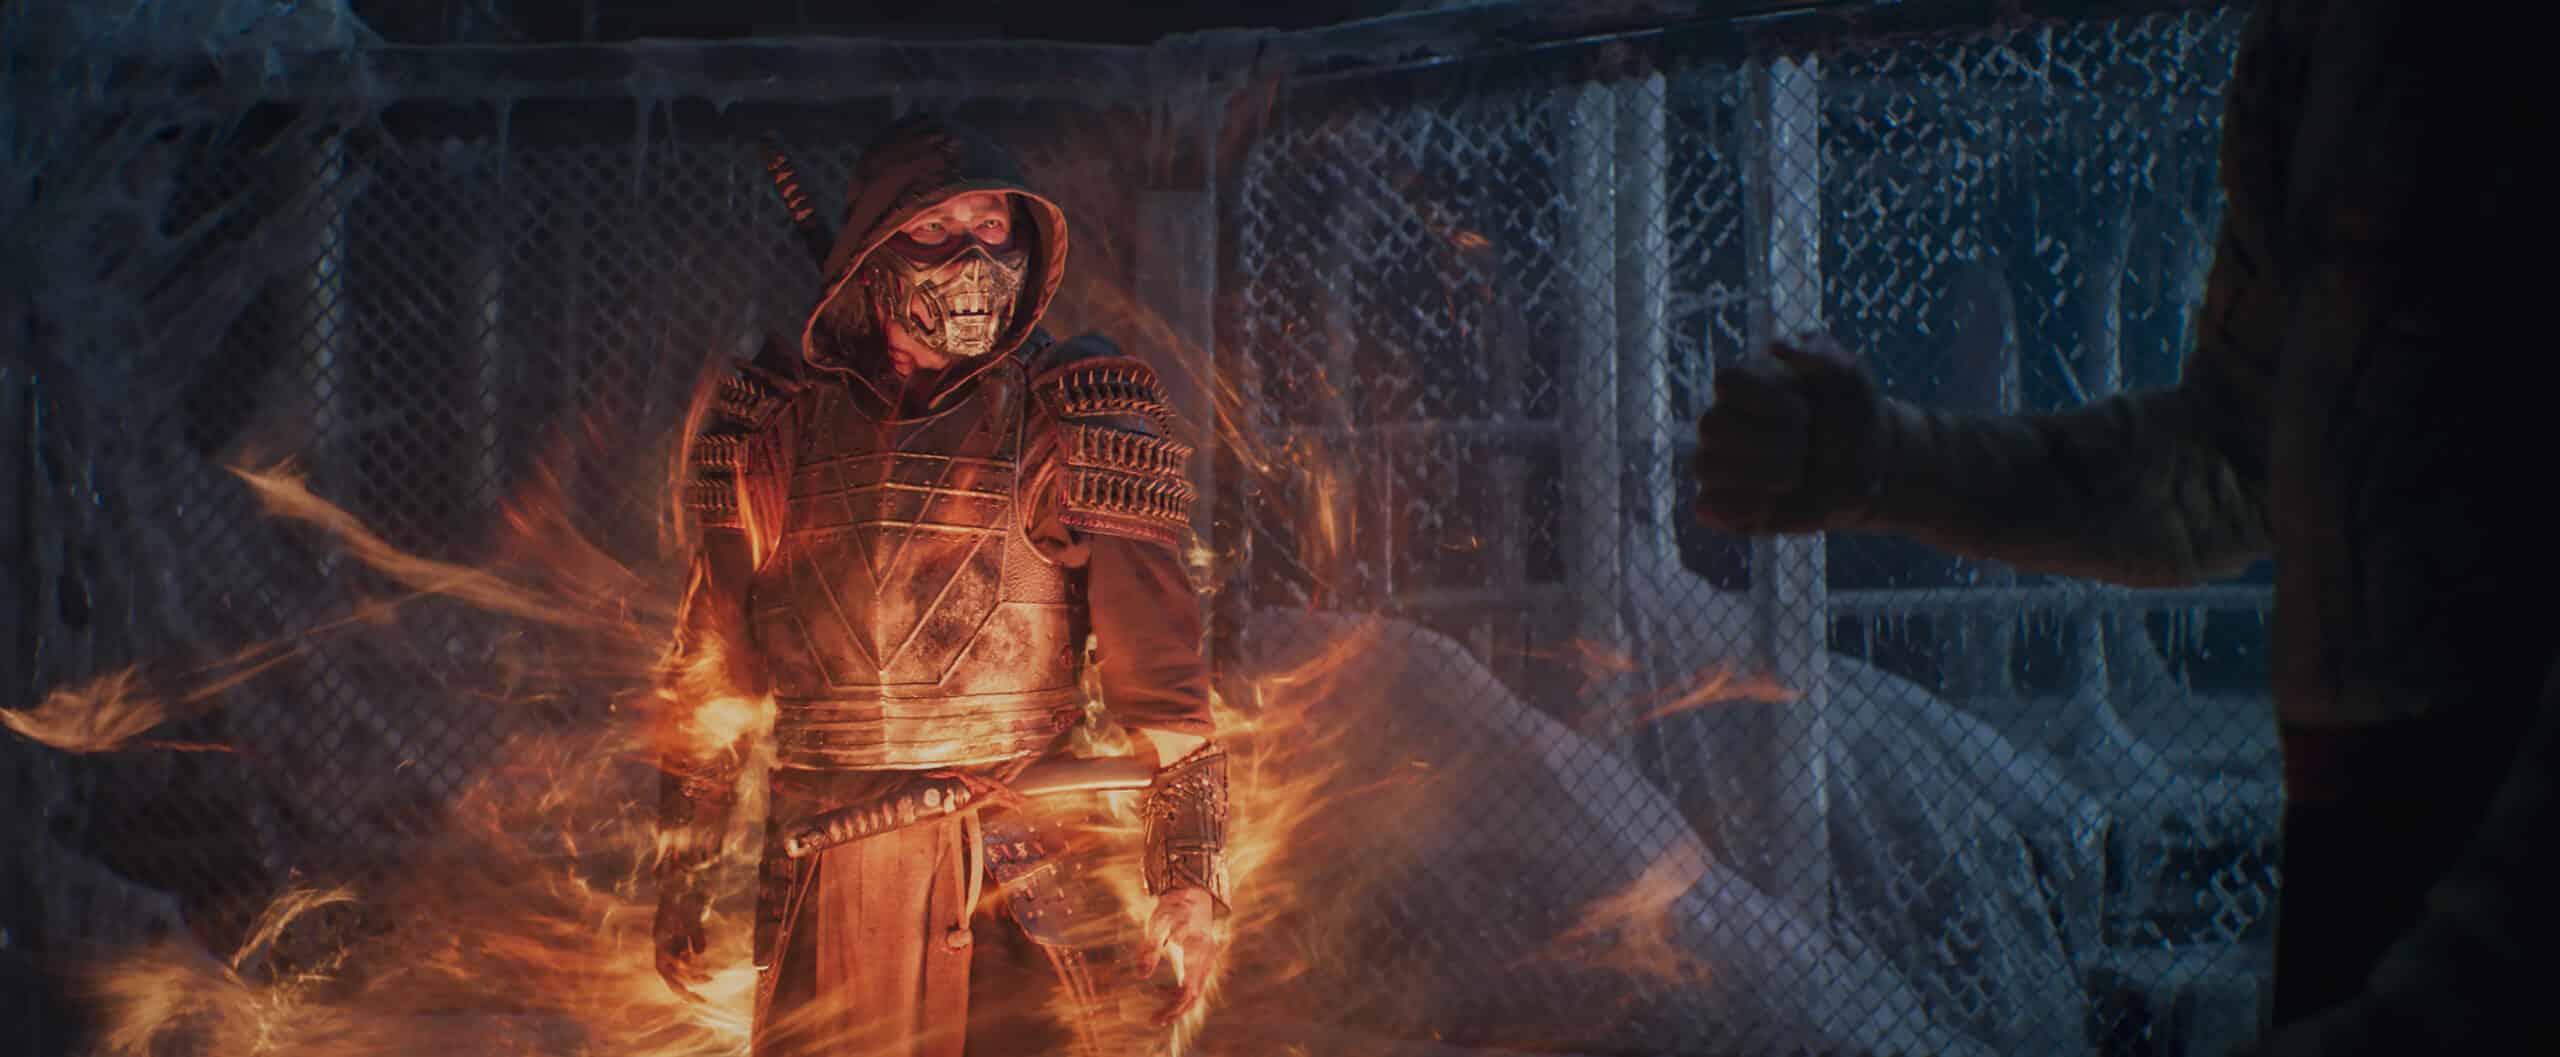 Mortal Kombat: Sequel to the popular film adaptation is making progress